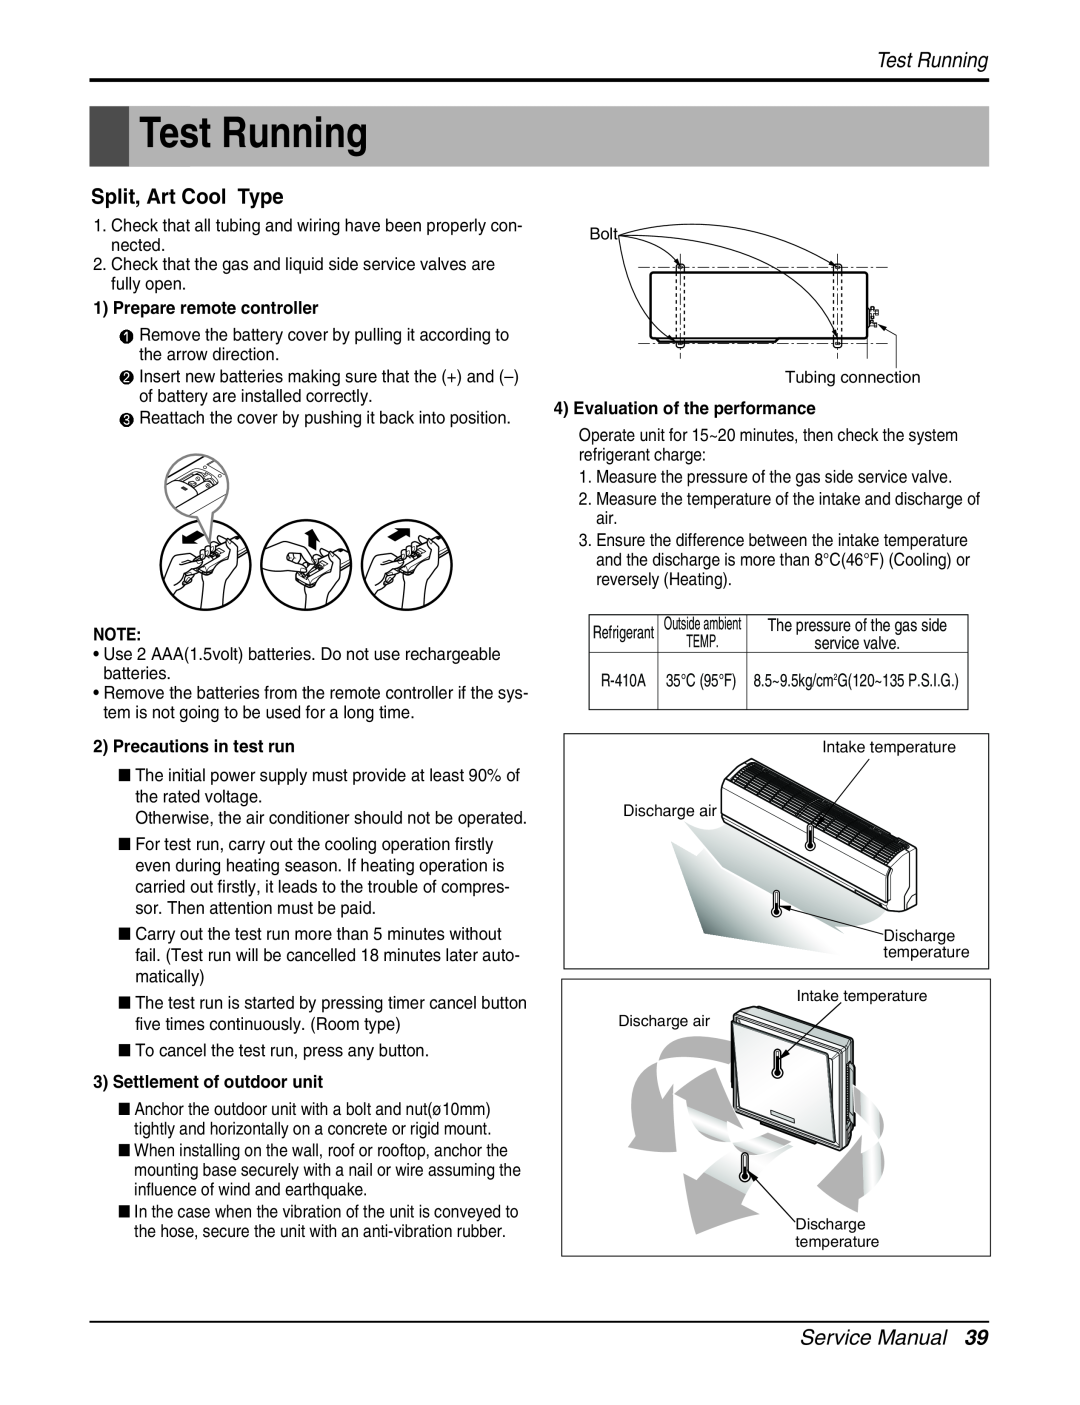 LG Electronics AMNC123DEA0 (LMN120CE) Test Running, Split, Art Cool Type, Service Manual, Prepare remote controller 